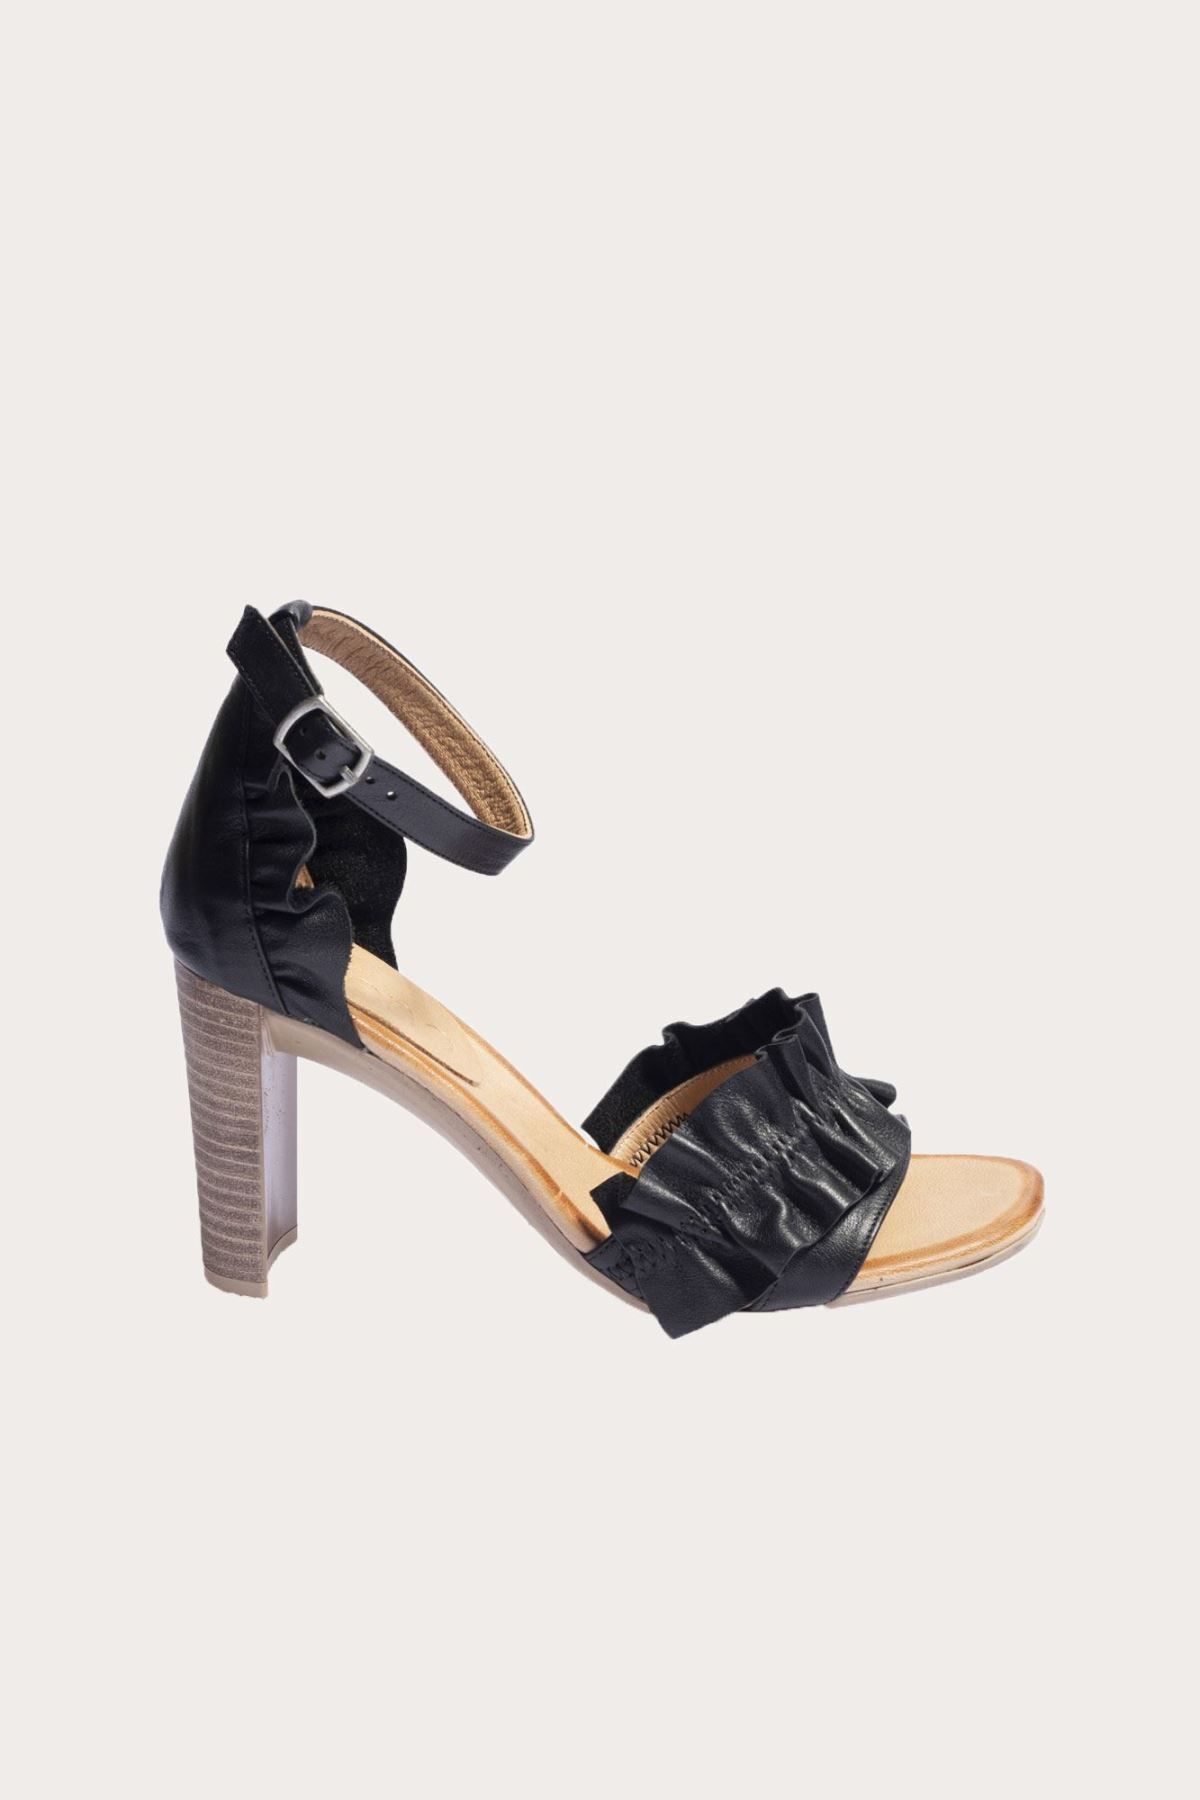 BUENO Shoes Siyah Deri Kadın Topuklu Sandalet